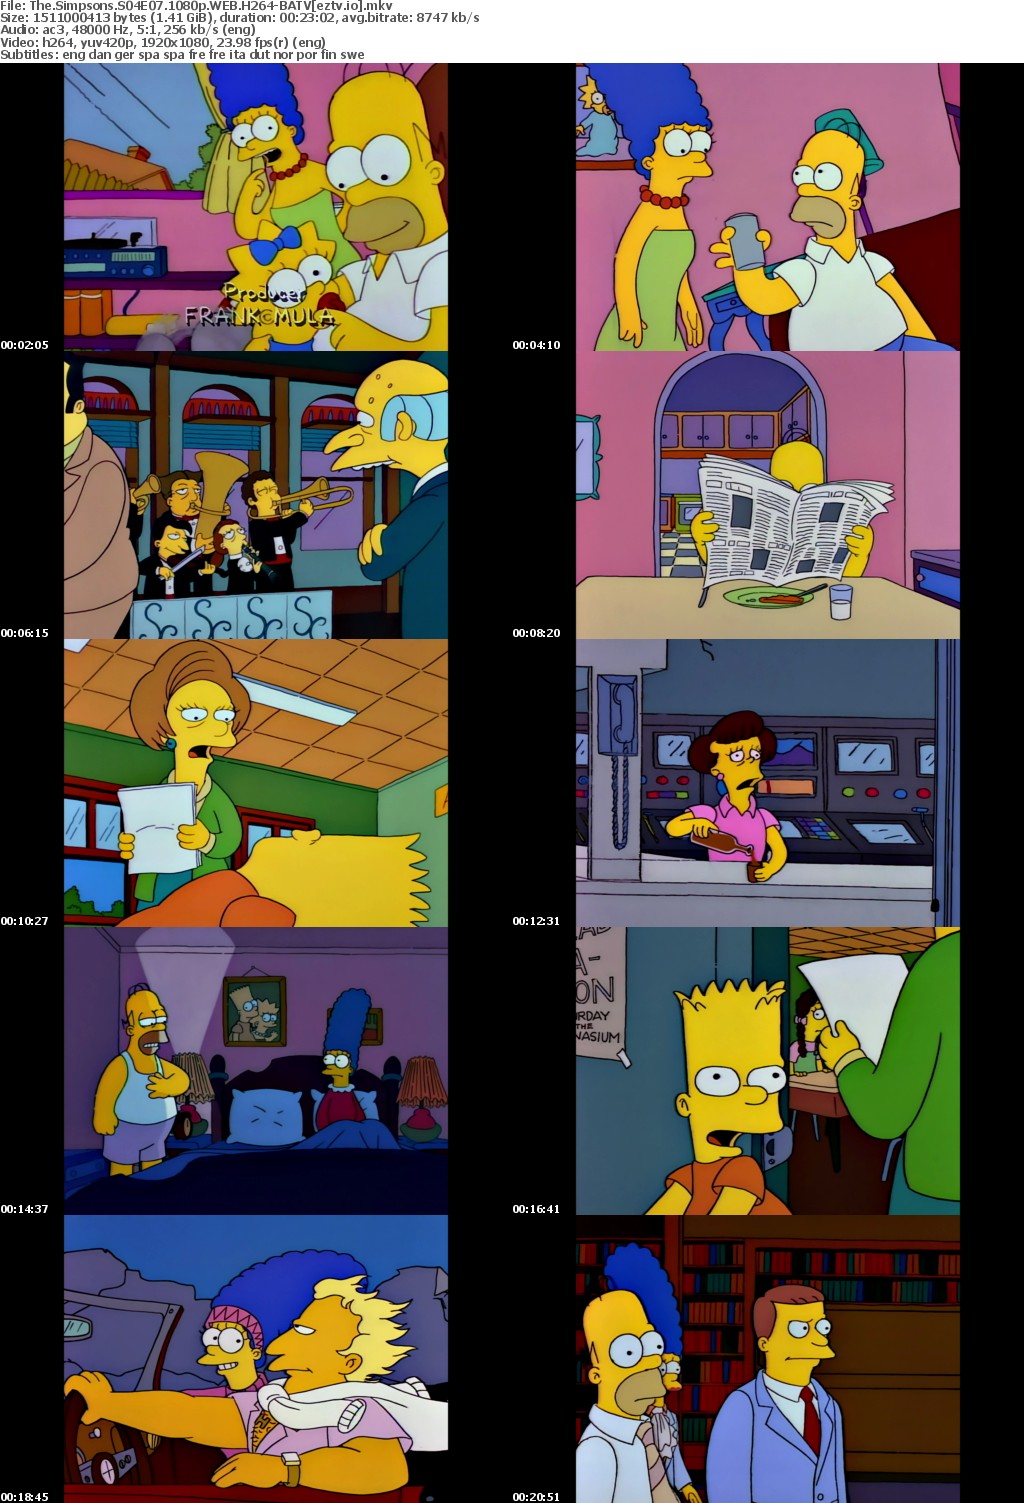 The Simpsons S04E07 1080p WEB H264-BATV